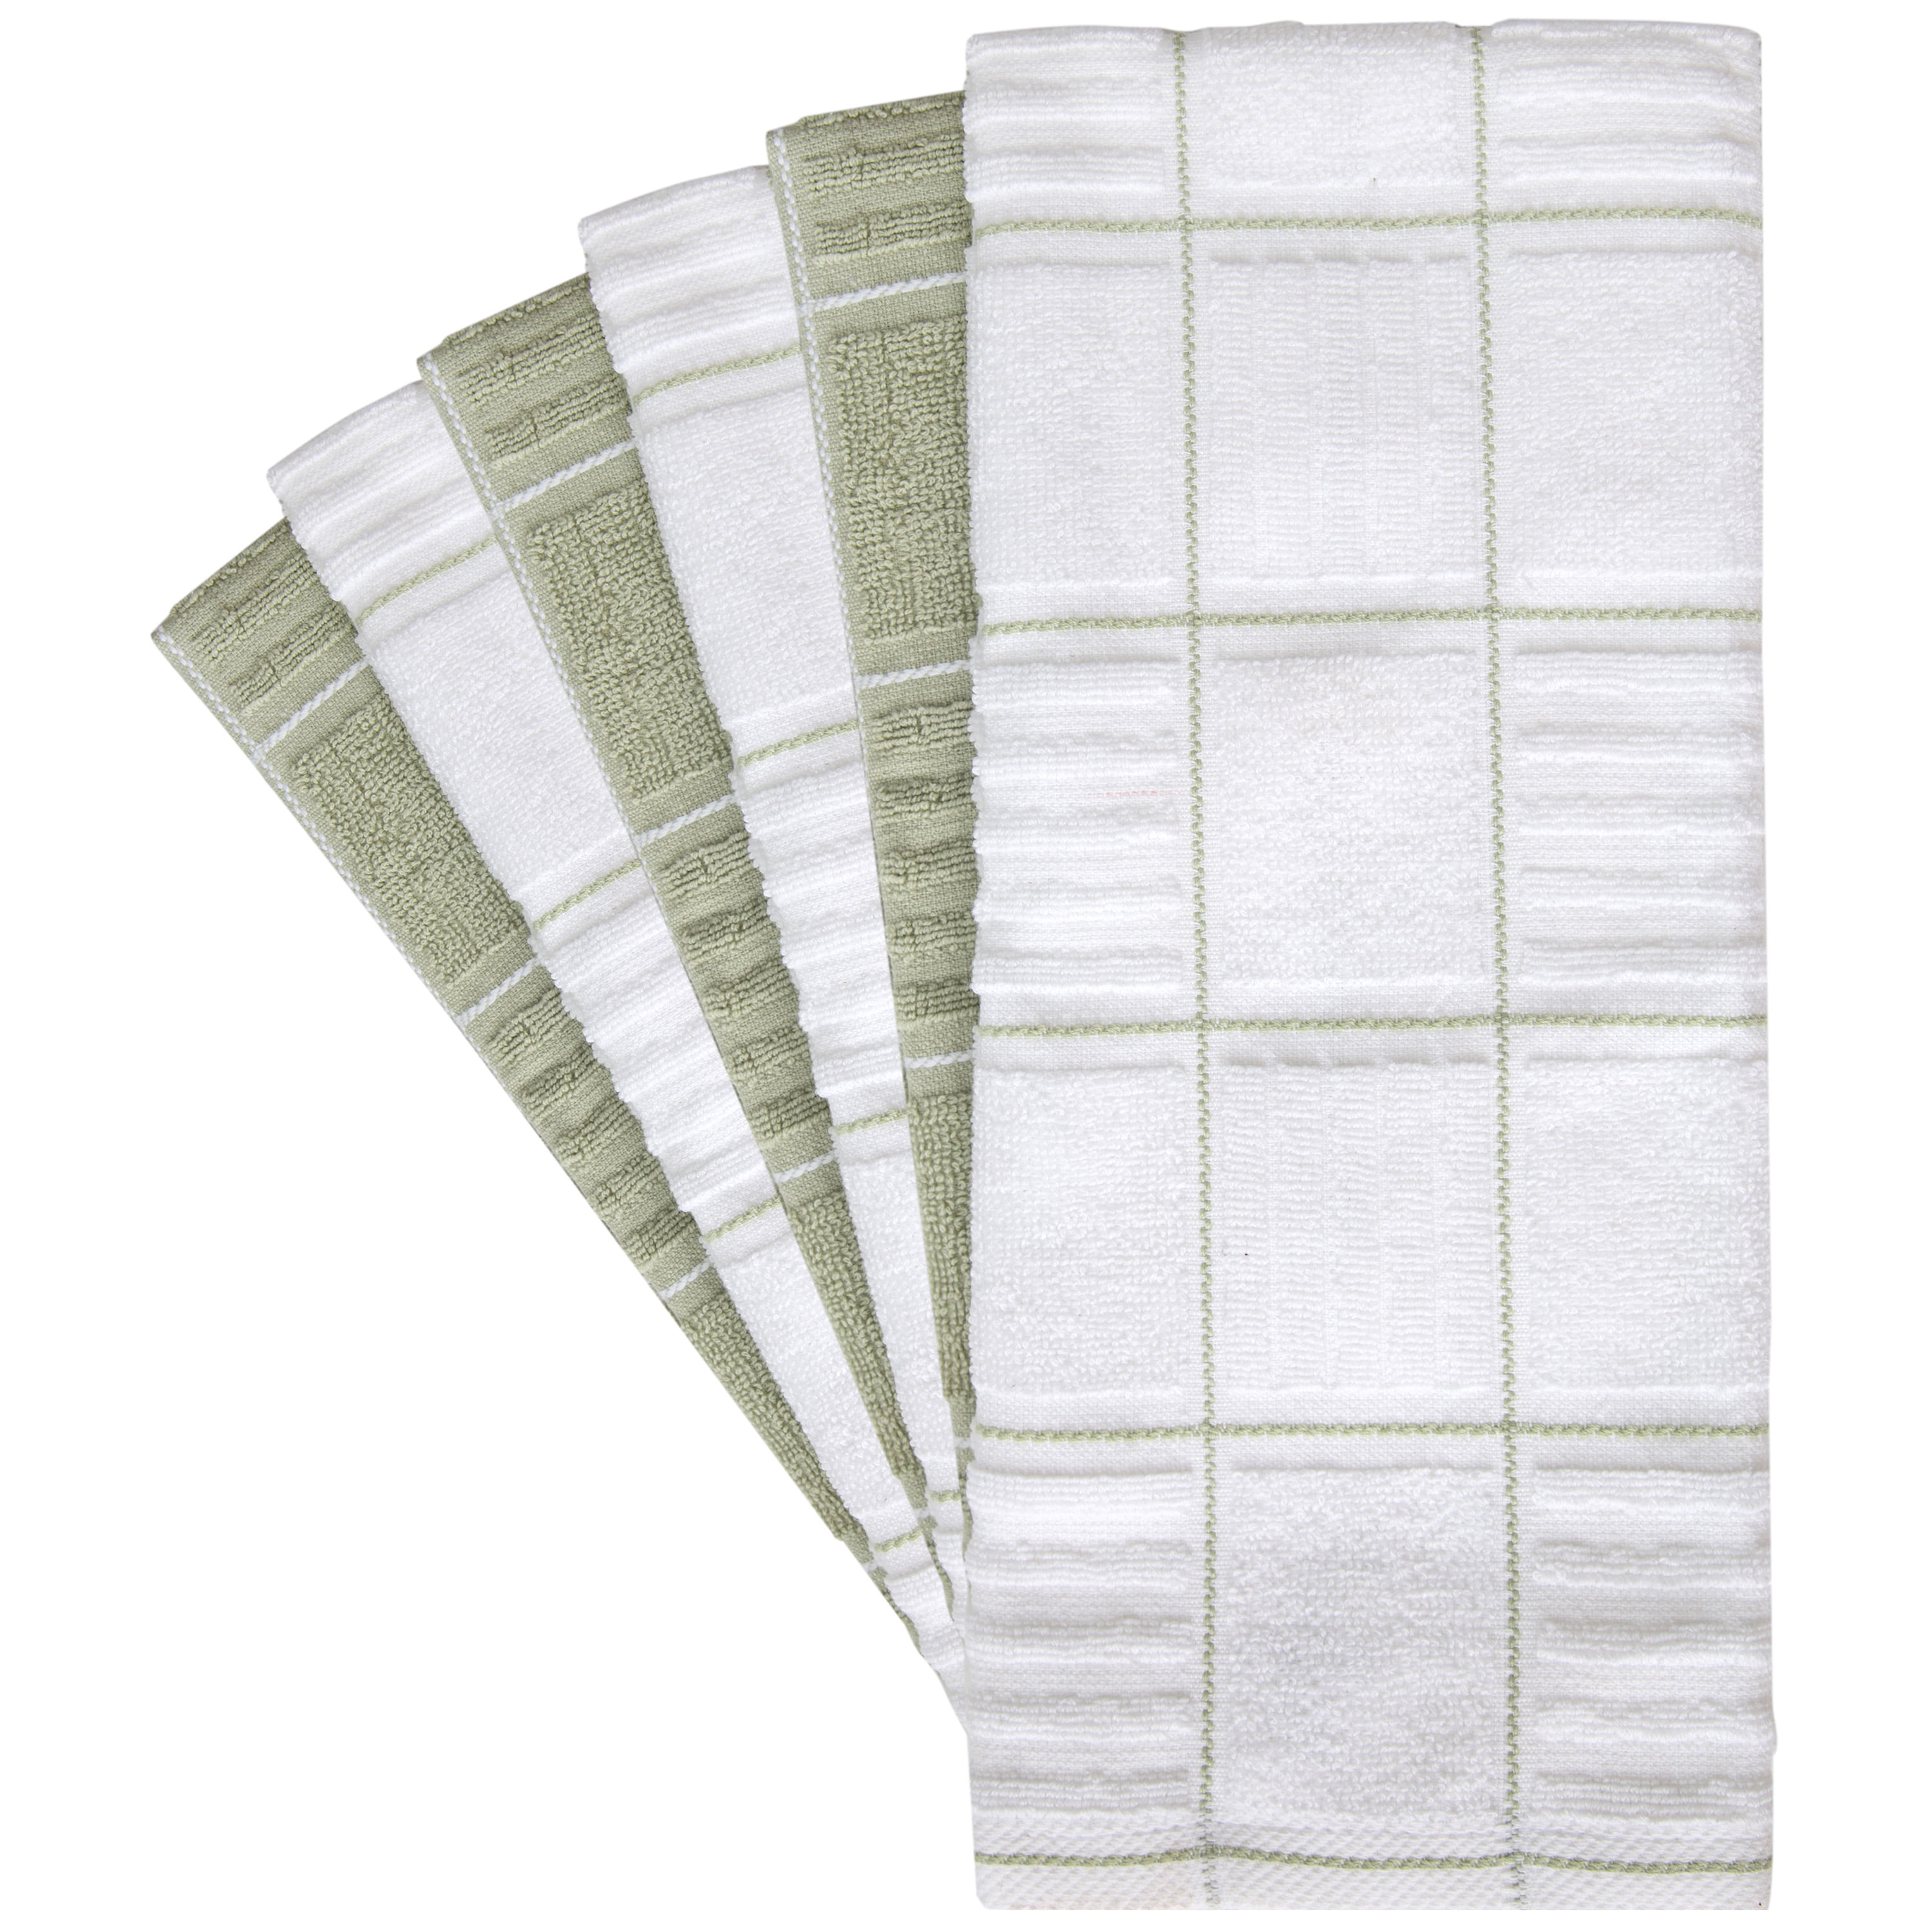 Bumble Bee Linen Cotton Organic Kitchen Towels, Dish Tea Towel